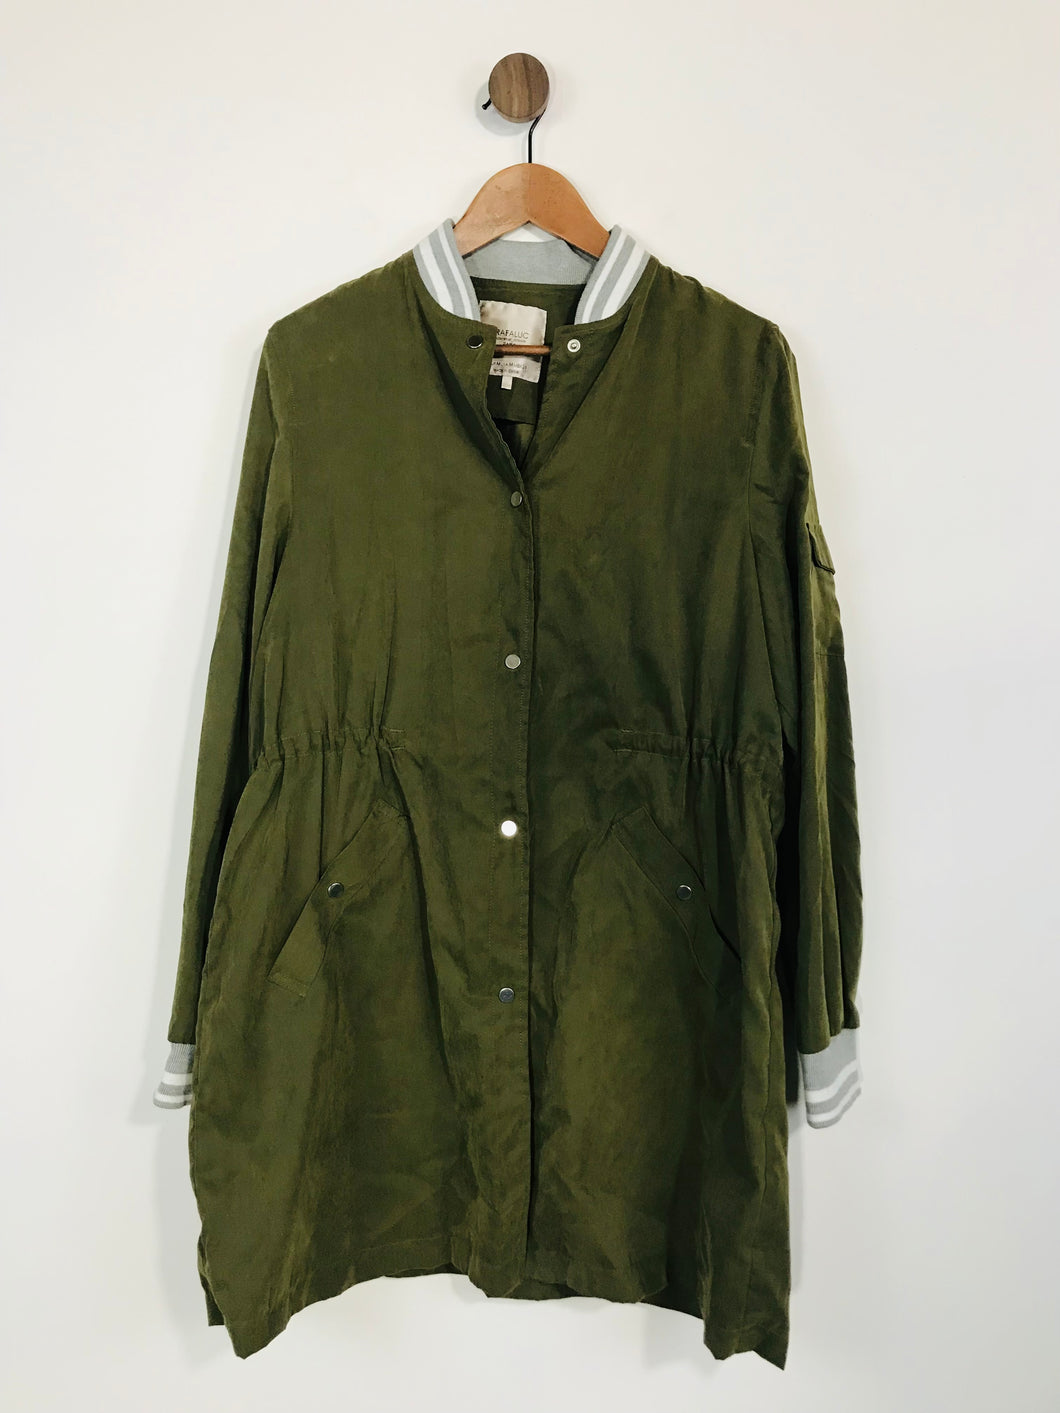 Zara Women's Lightweight Military Bomber Overcoat | M UK10-12 | Green